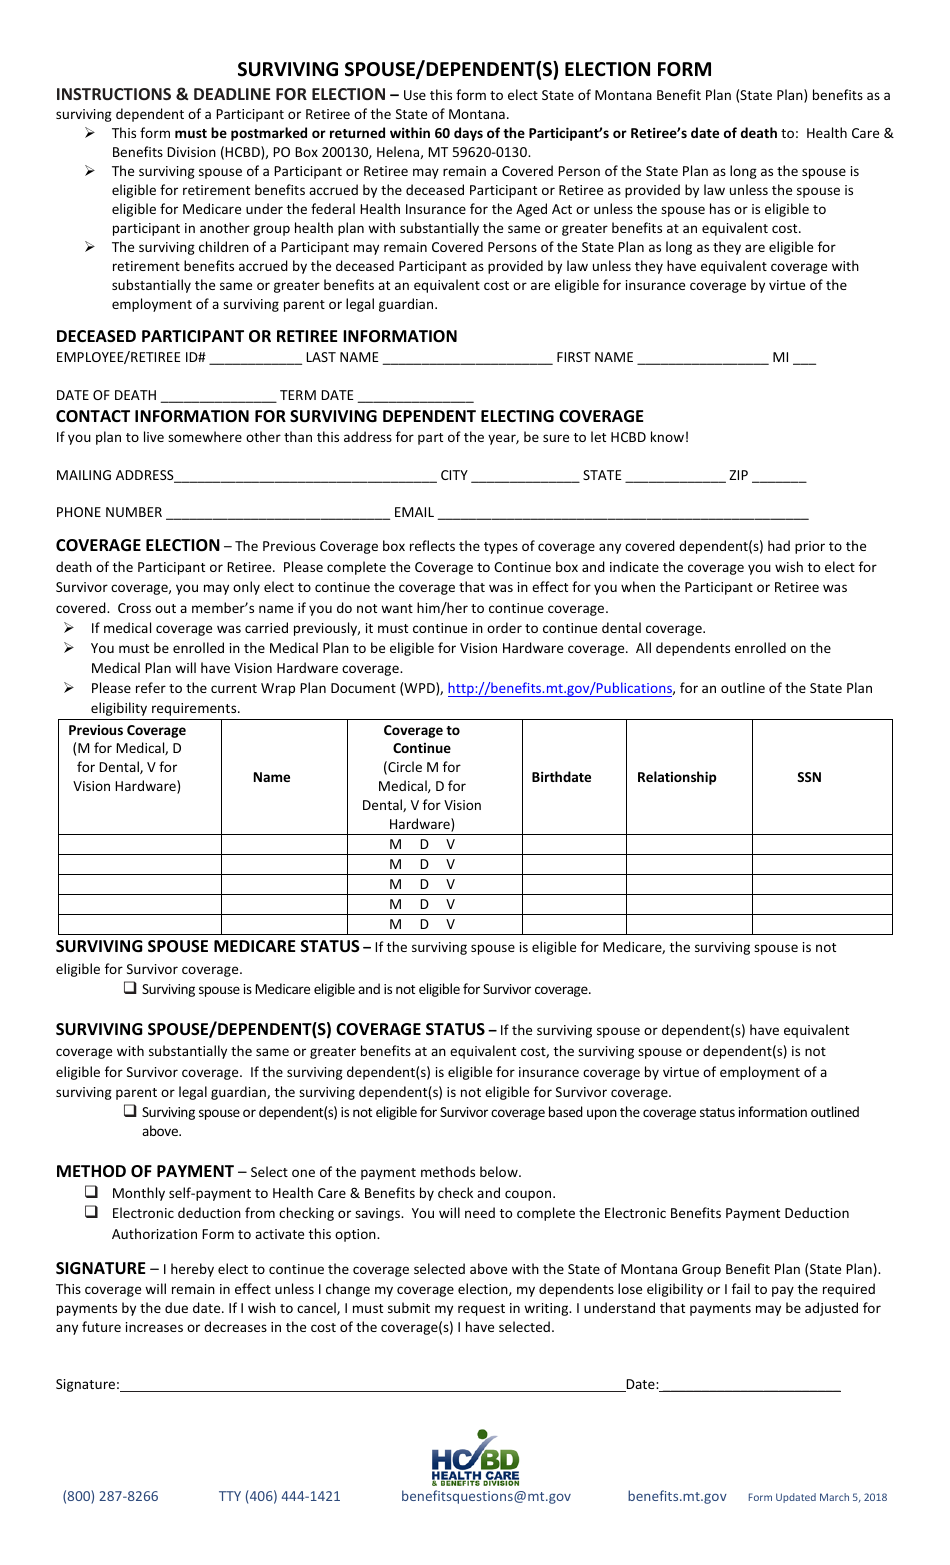 Surviving Spouse / Dependent(s) Election Form - Montana, Page 1